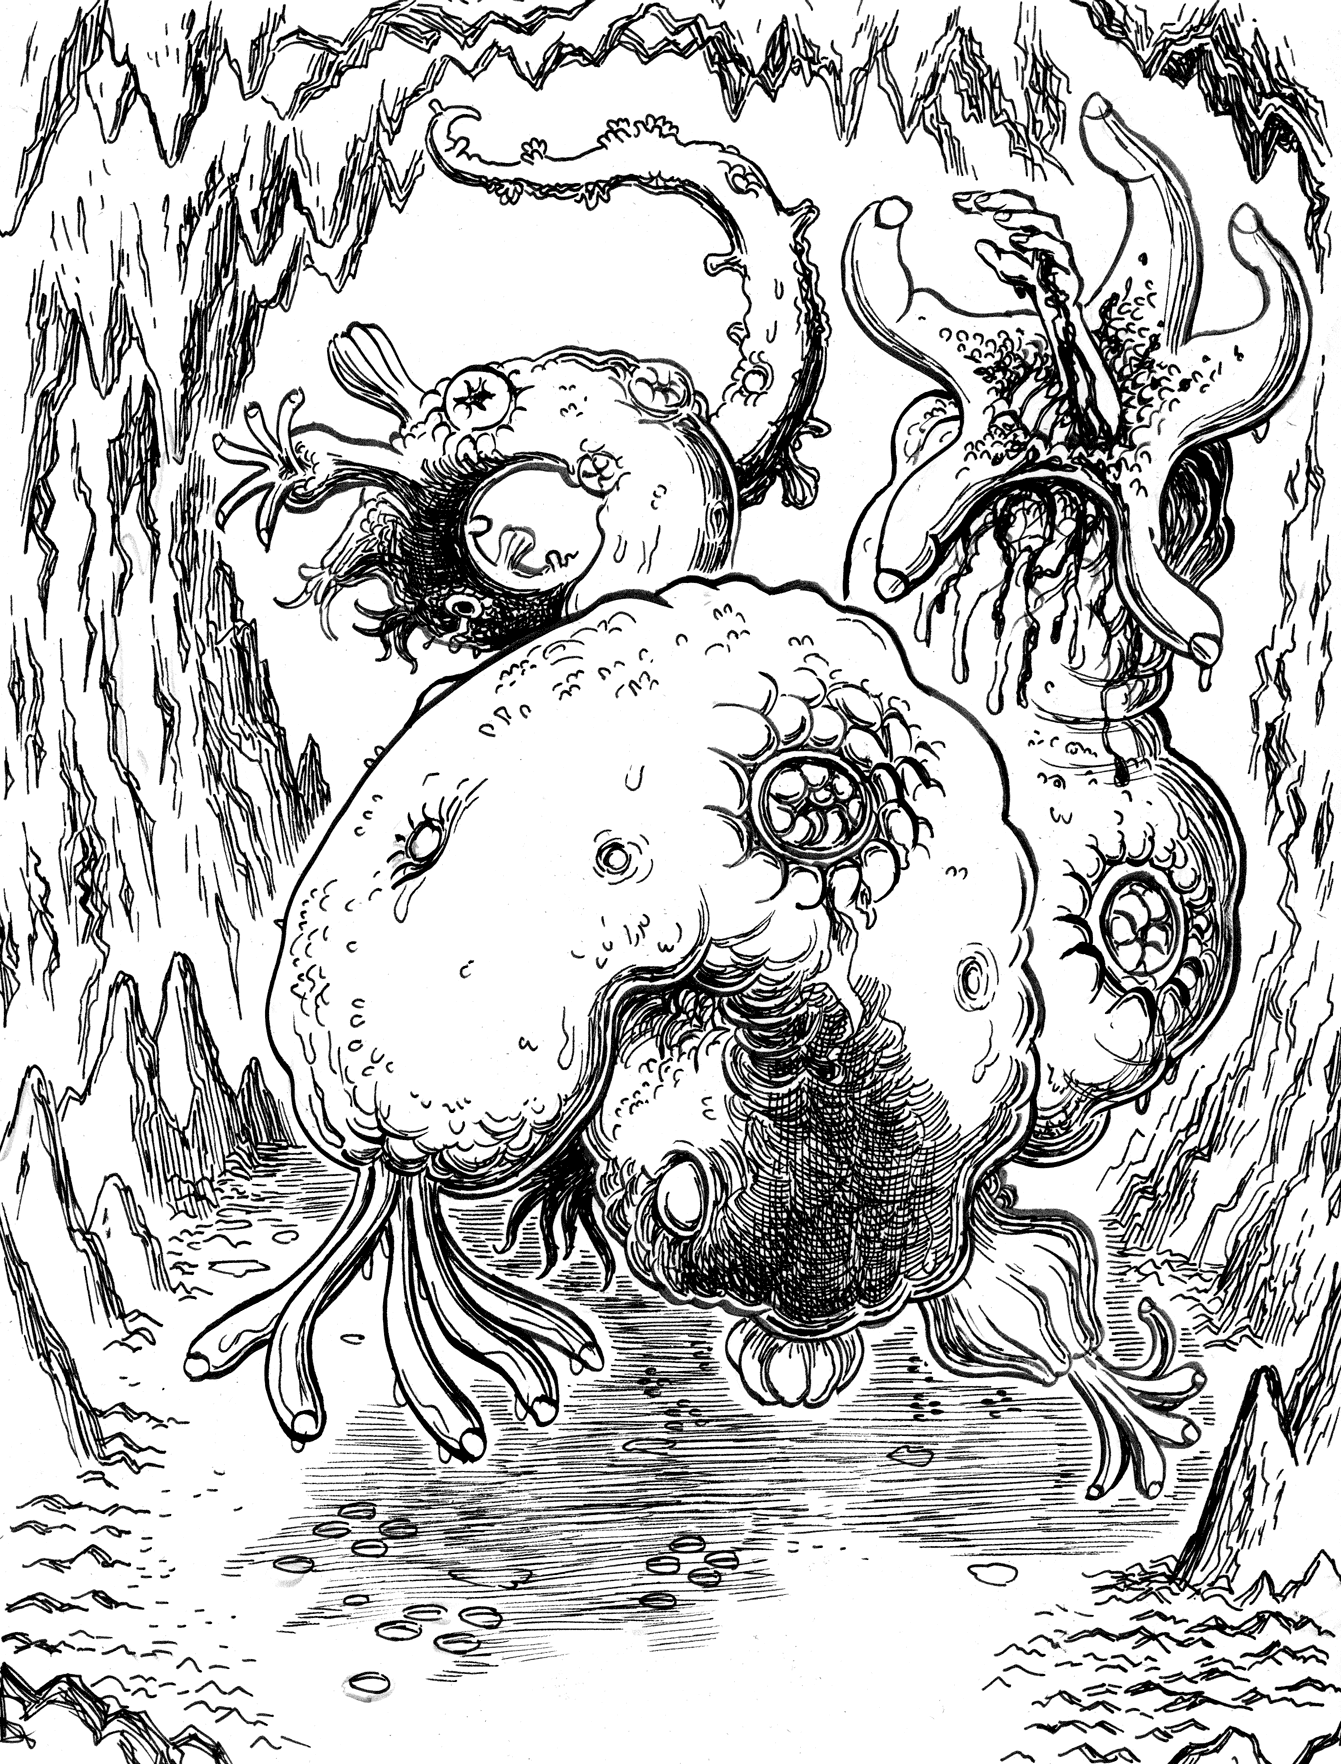 Lovecraft Sketch MWF: The Flying Polyps